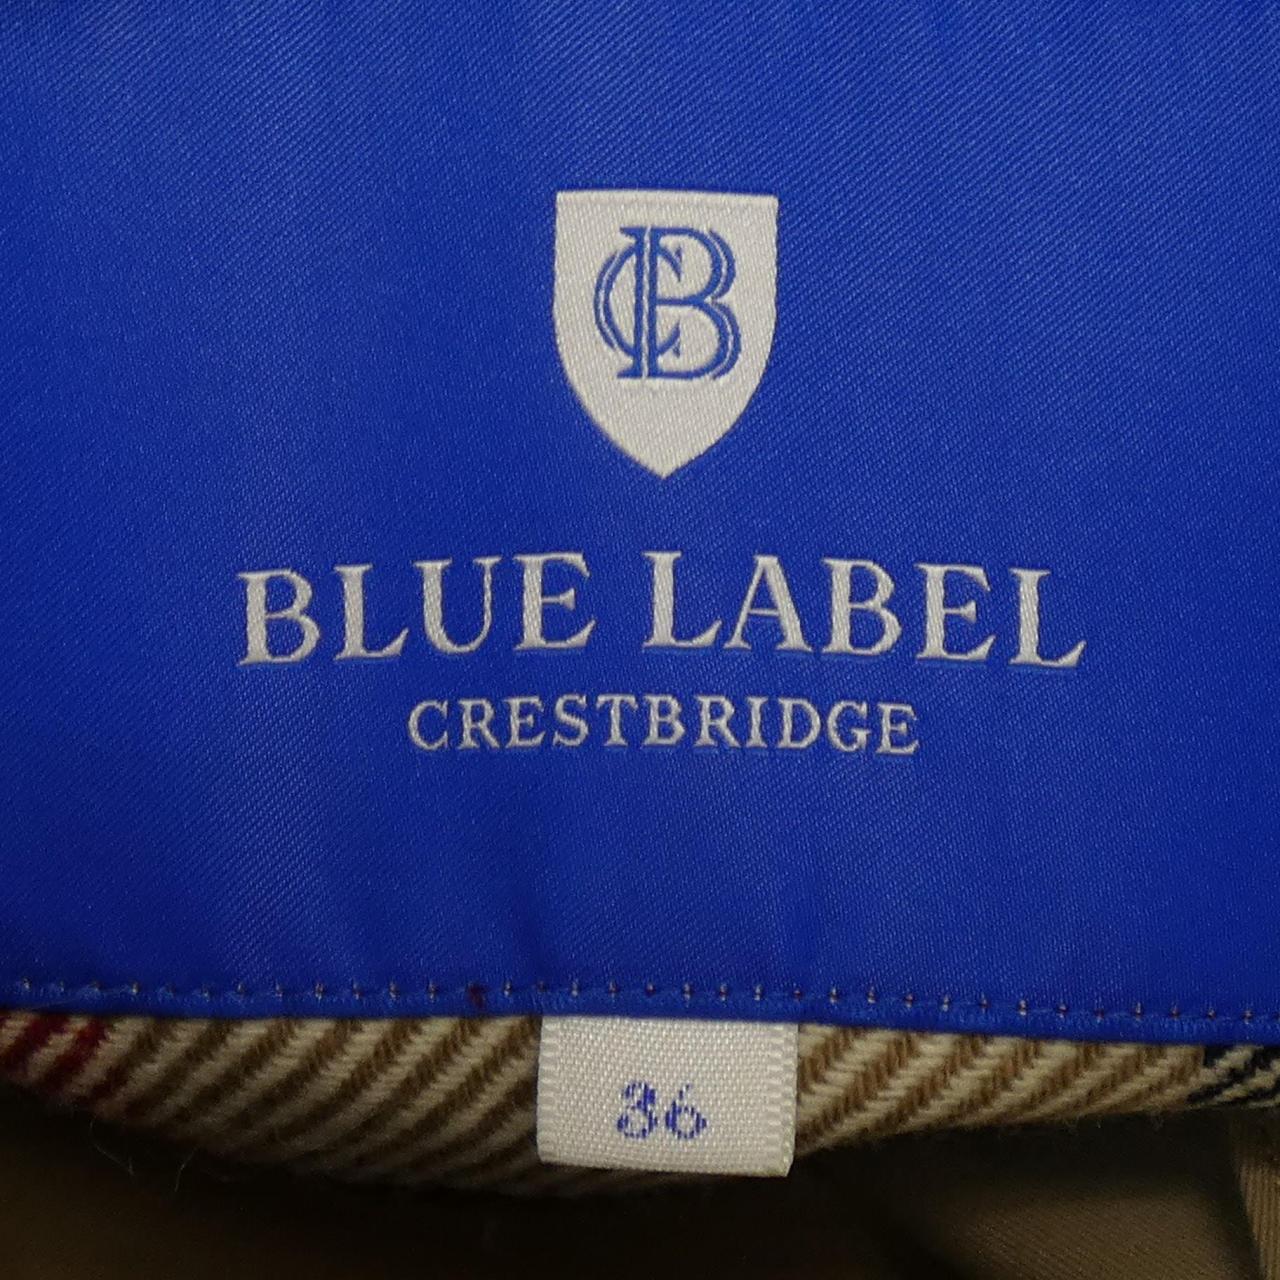 BLUE LABEL CRESTBRID trench coat